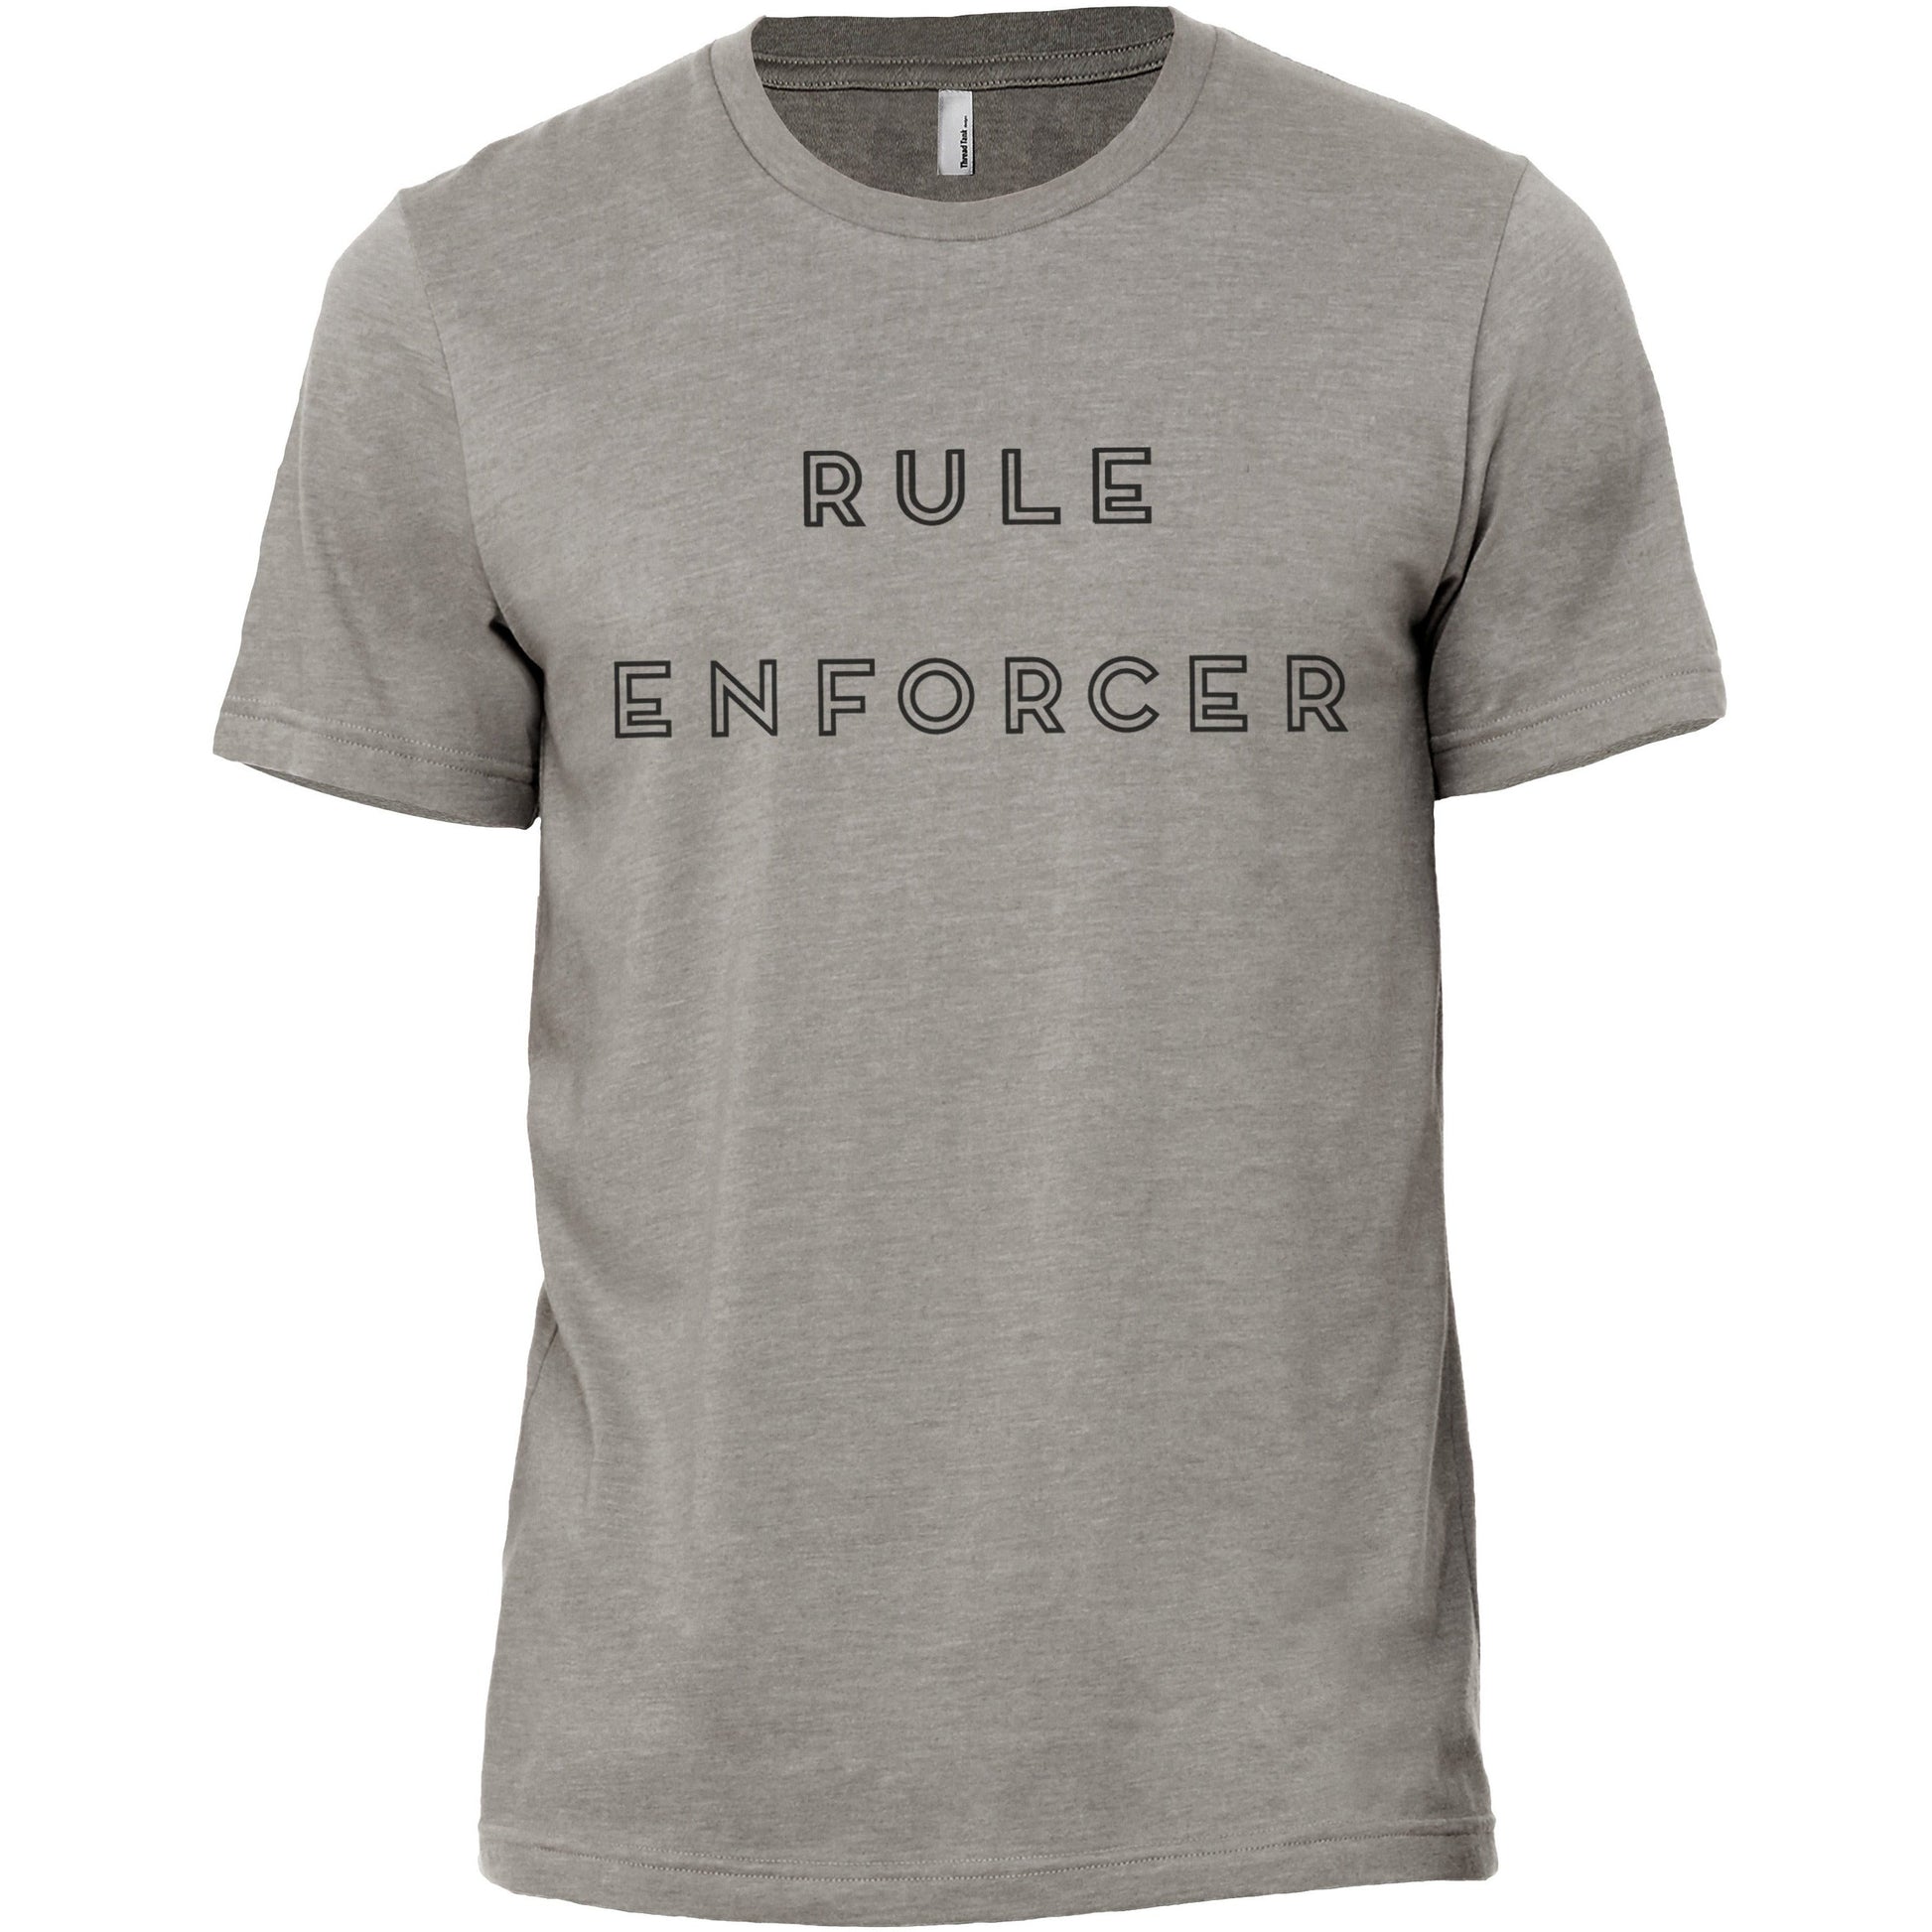 Rule Enforcer - Stories You Can Wear